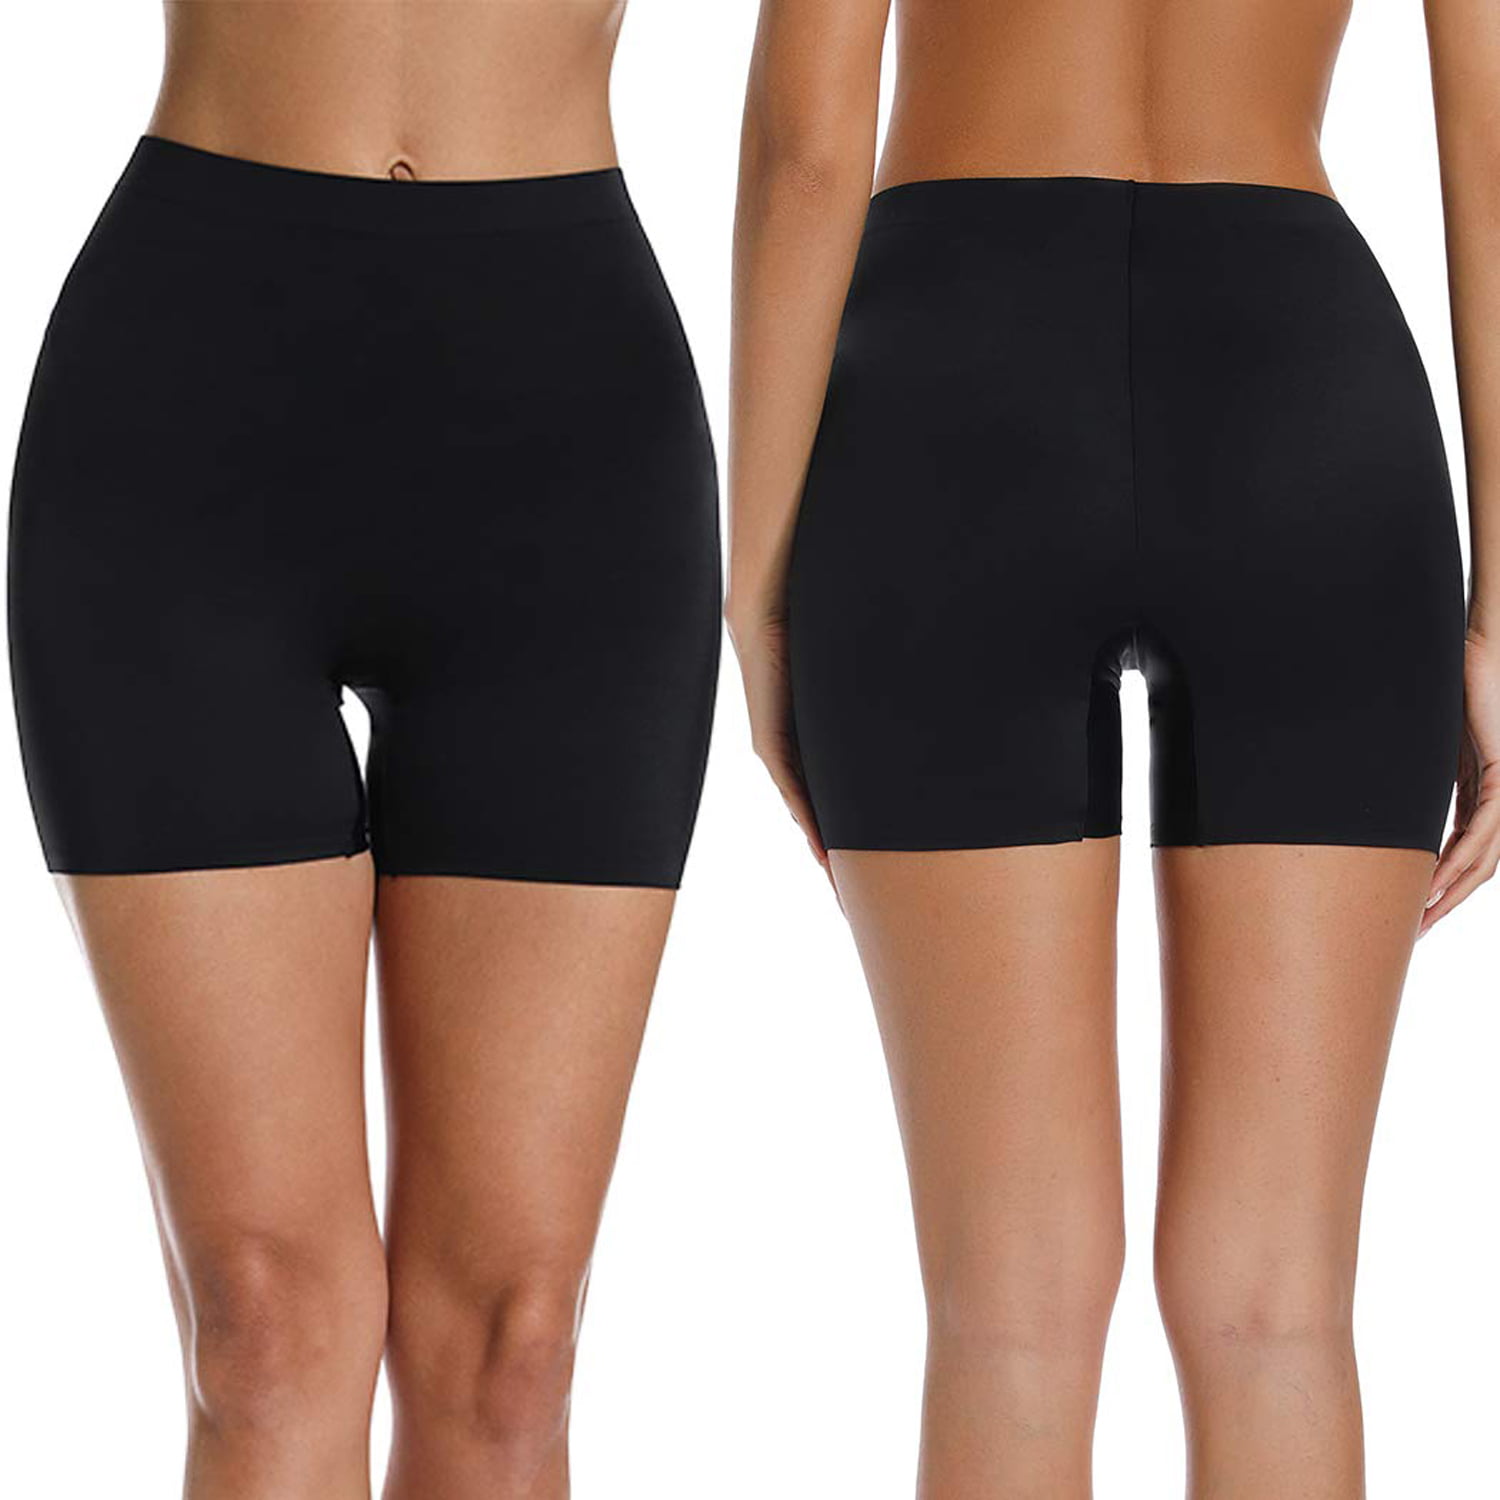 Slip Shorts for Women Under Dress Underwear Boyshort Panties 